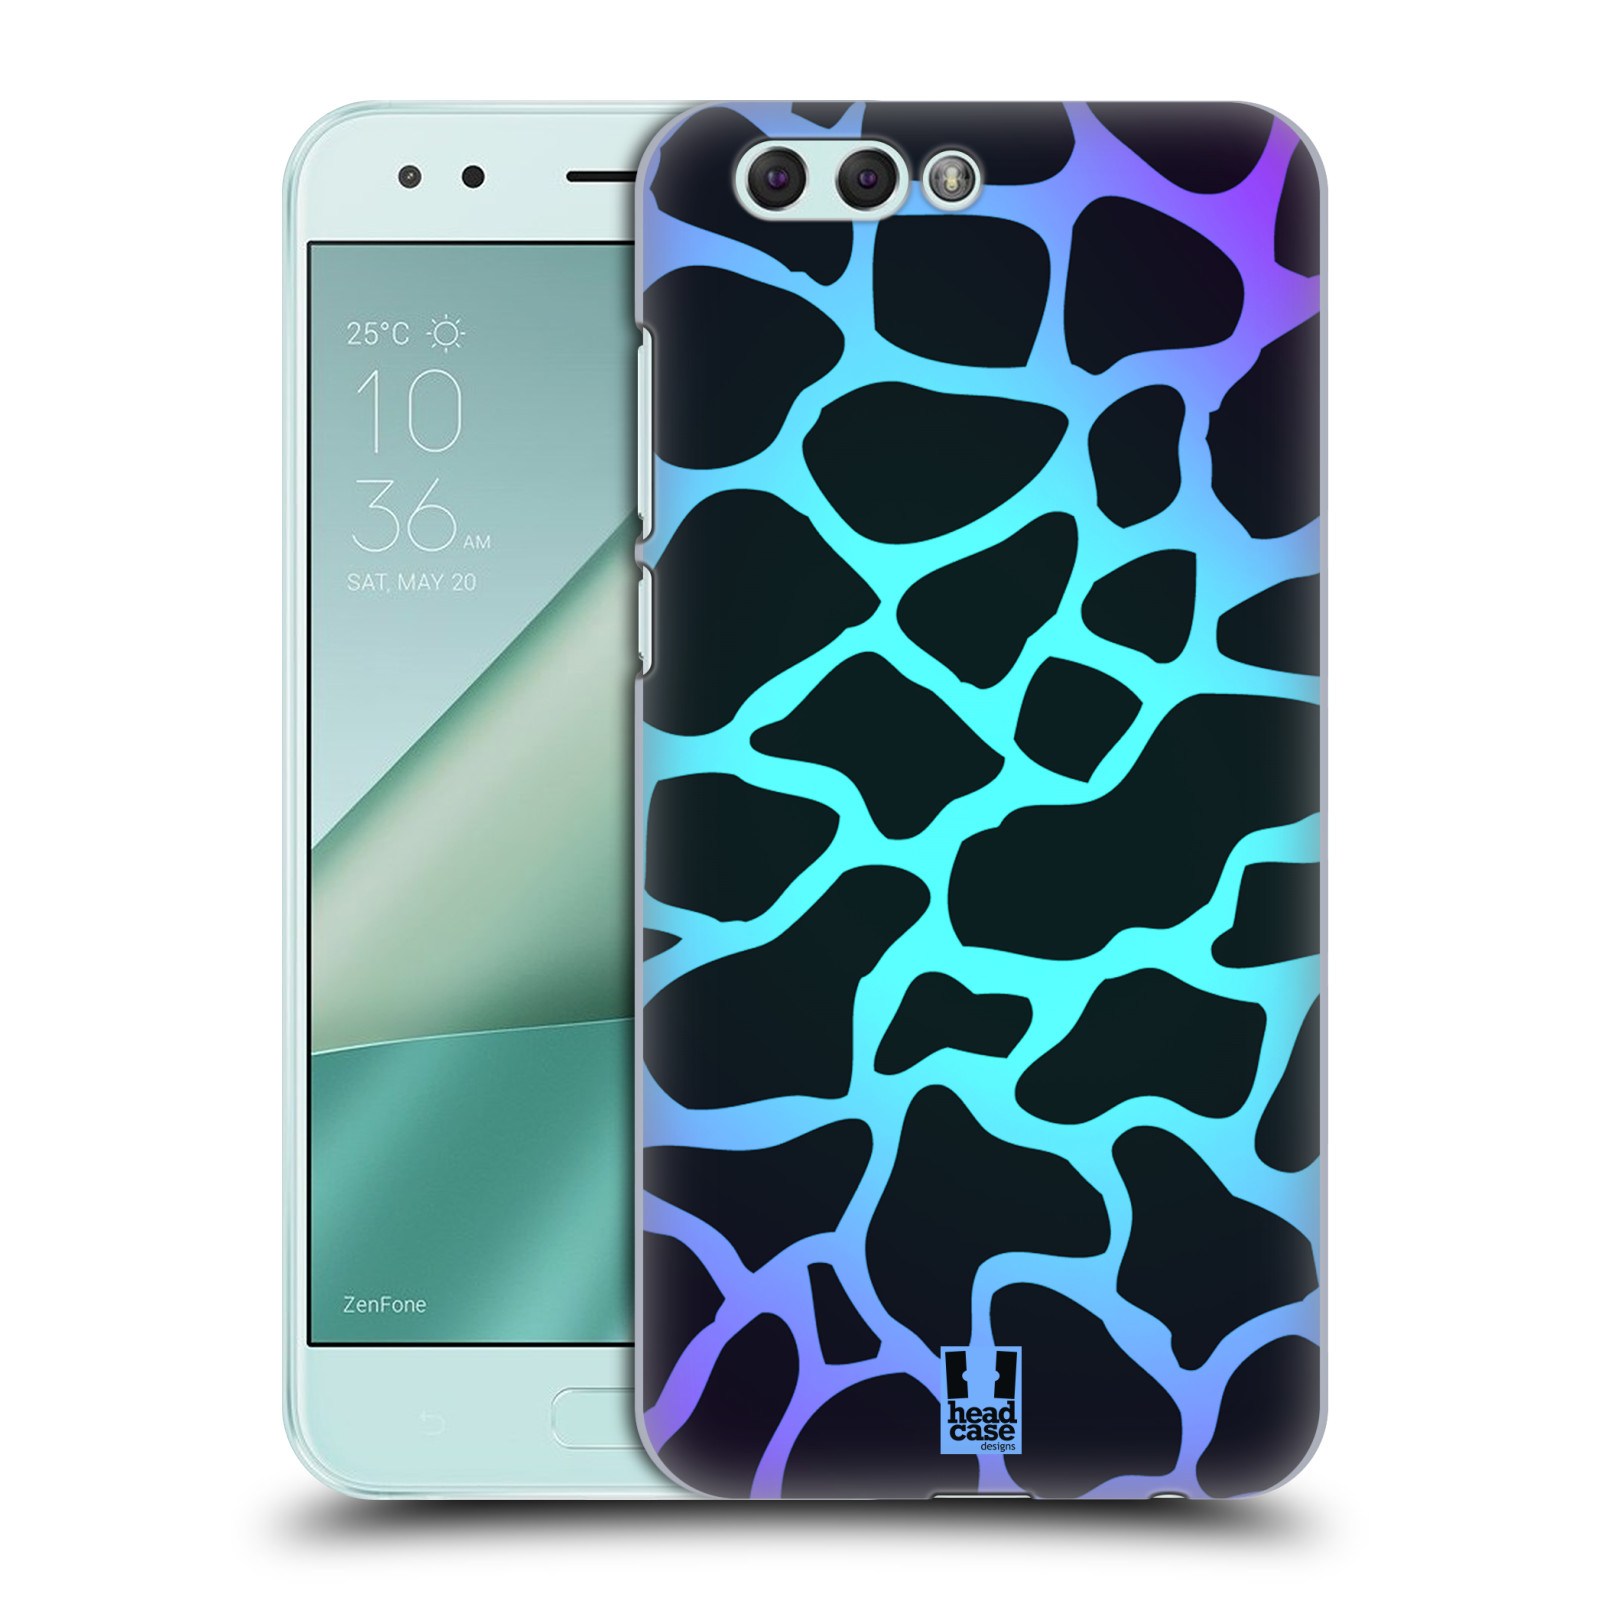 HEAD CASE plastový obal na mobil Asus Zenfone 4 ZE554KL vzor Divočina zvíře tyrkysová žirafa magický vzor